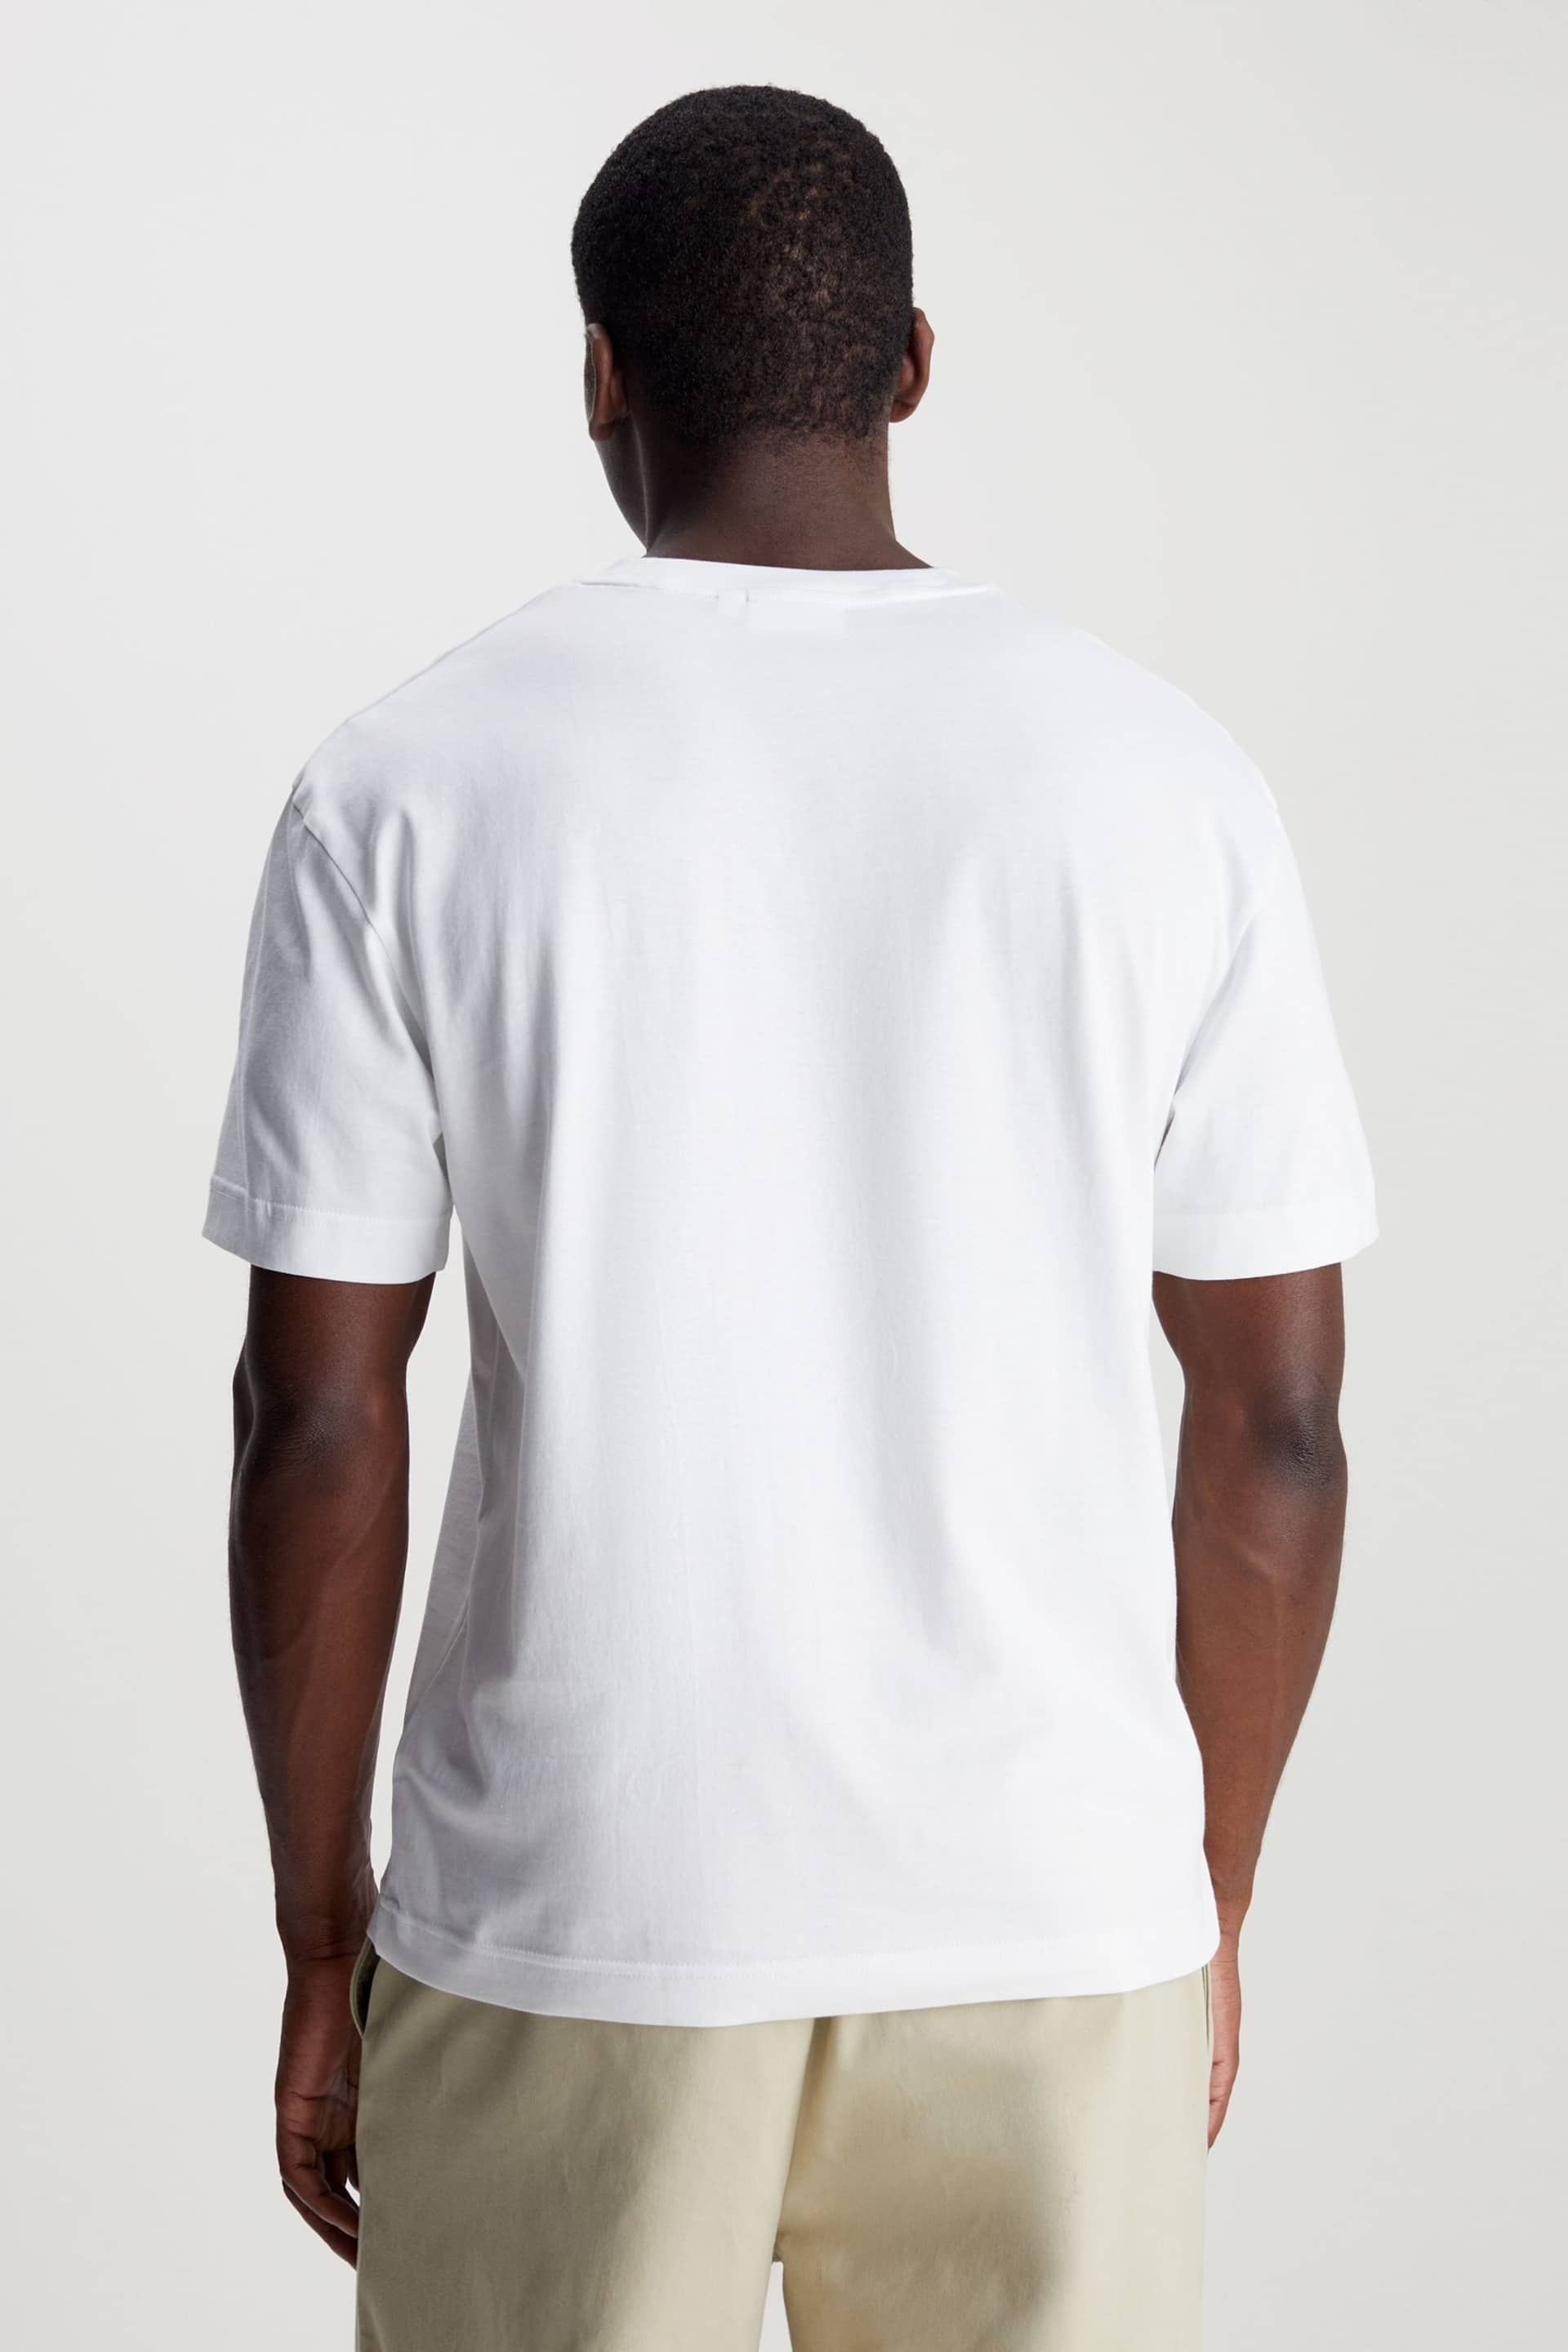 Calvin Klein White Logo T-Shirt - Image 2 of 4